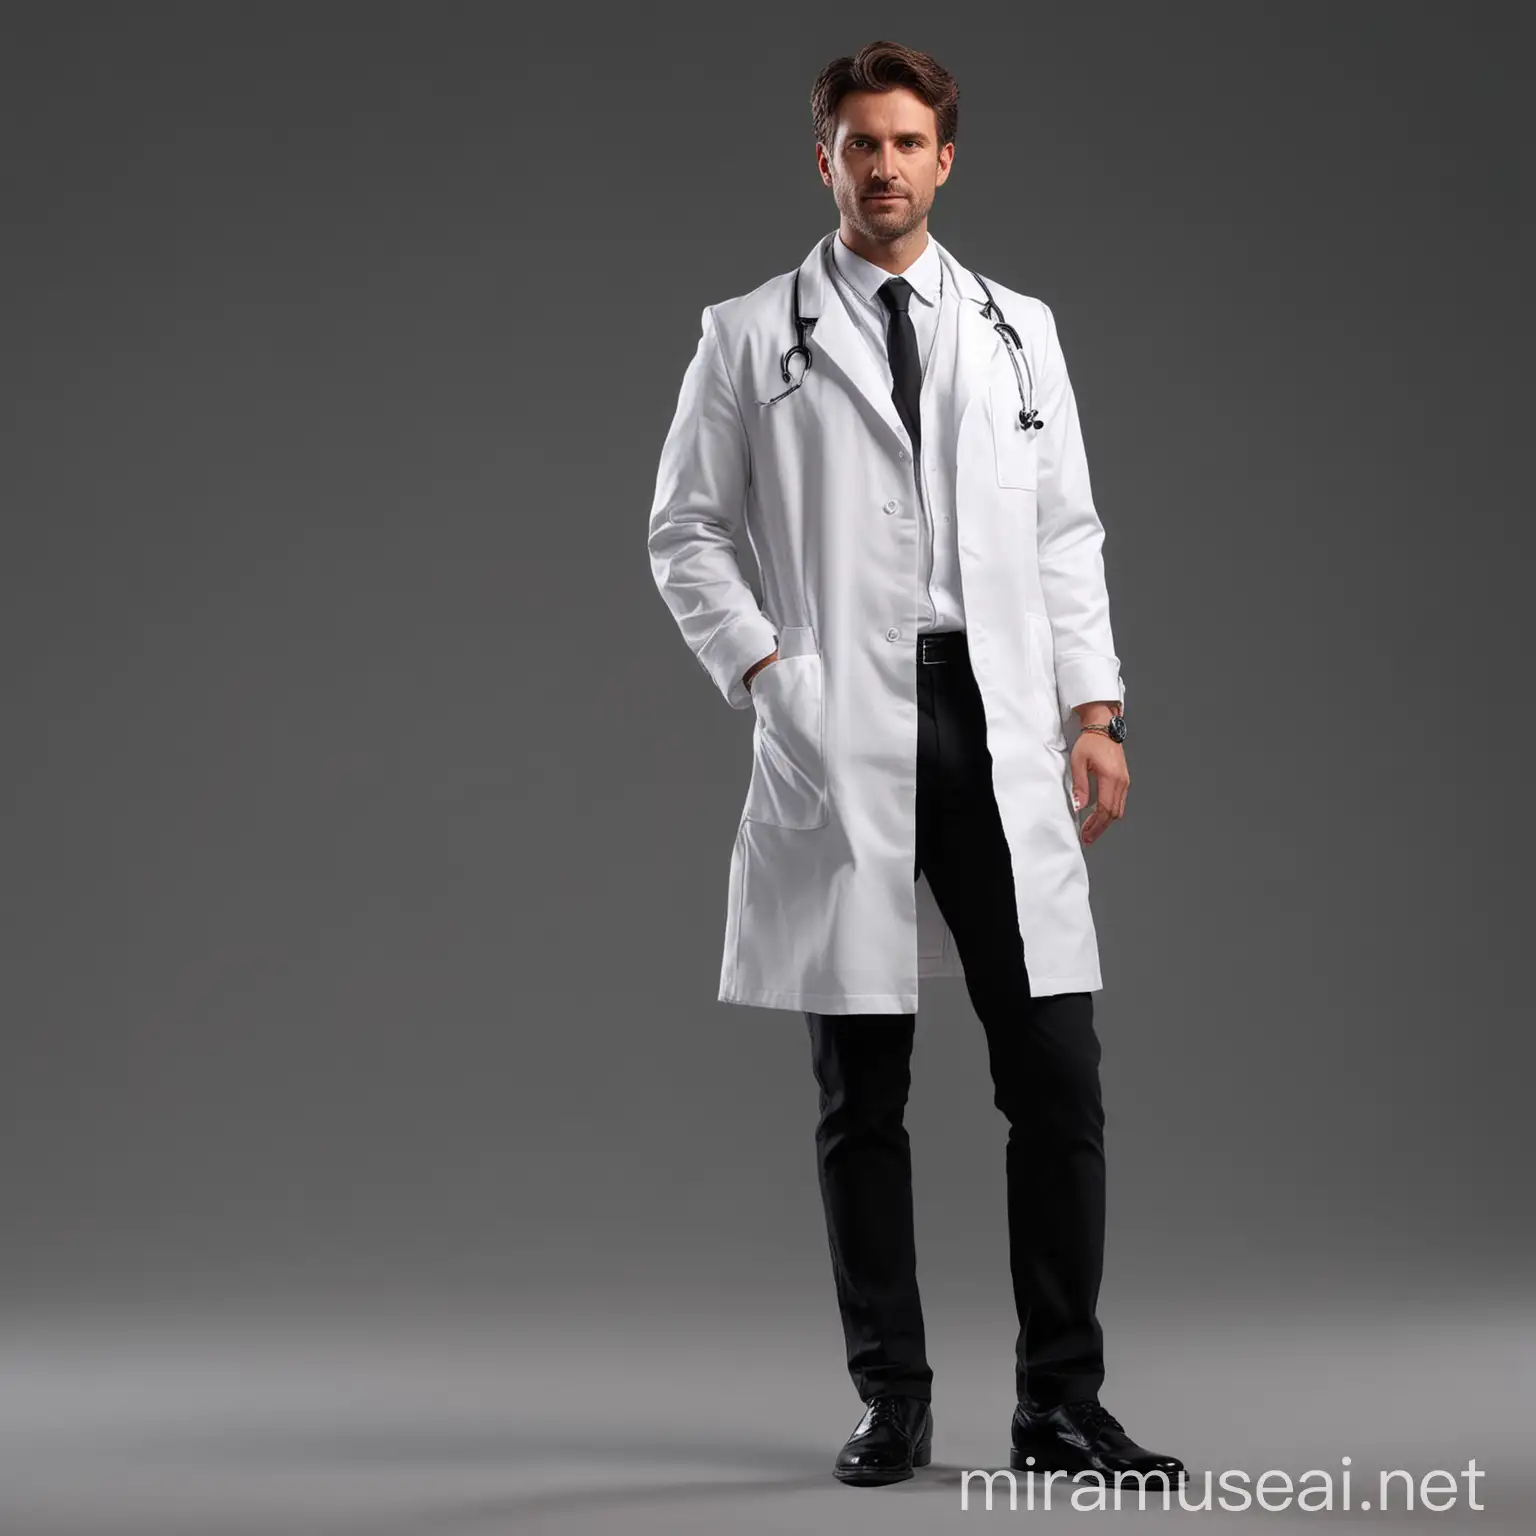 elegant male doctor wearing white doctor coat, white shirt, black pants, black shoes, plain background, high detail, high quality, 8k, 35mm camera, realistic, CGI, VFX, SFX